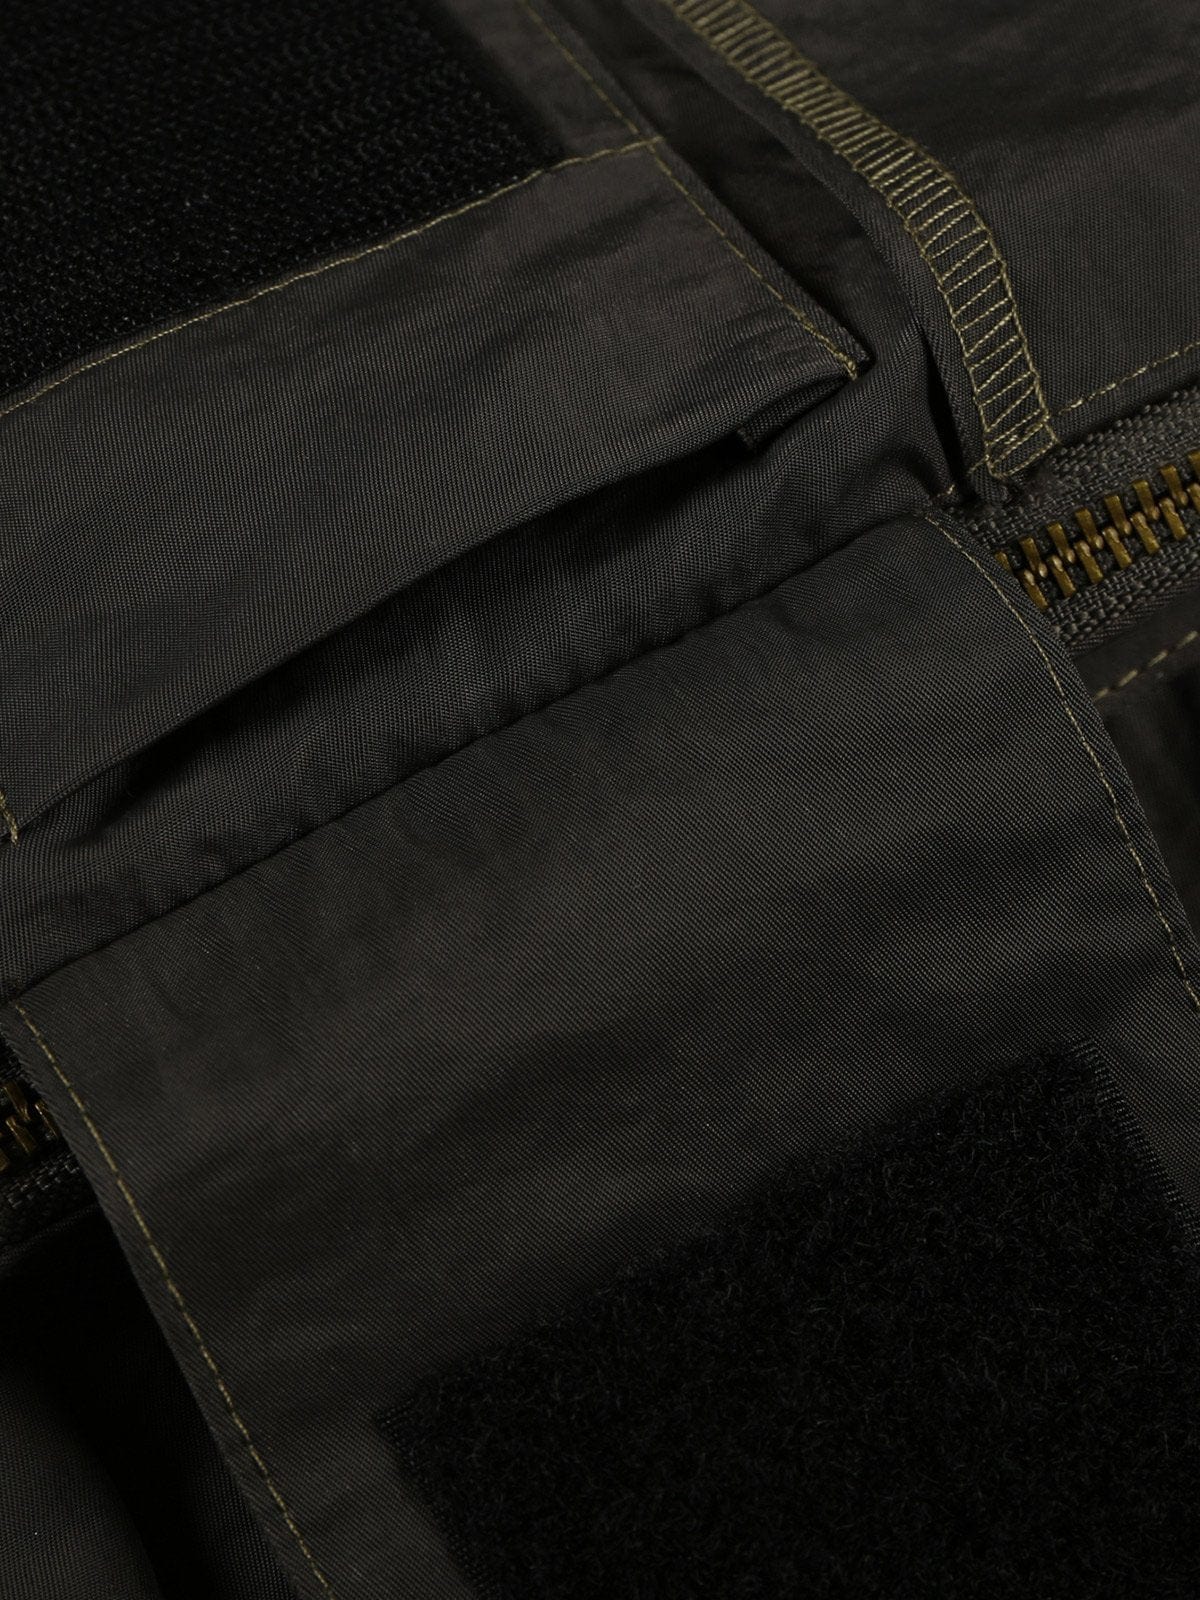 NEV 3D Pocket Drawstring Shorts